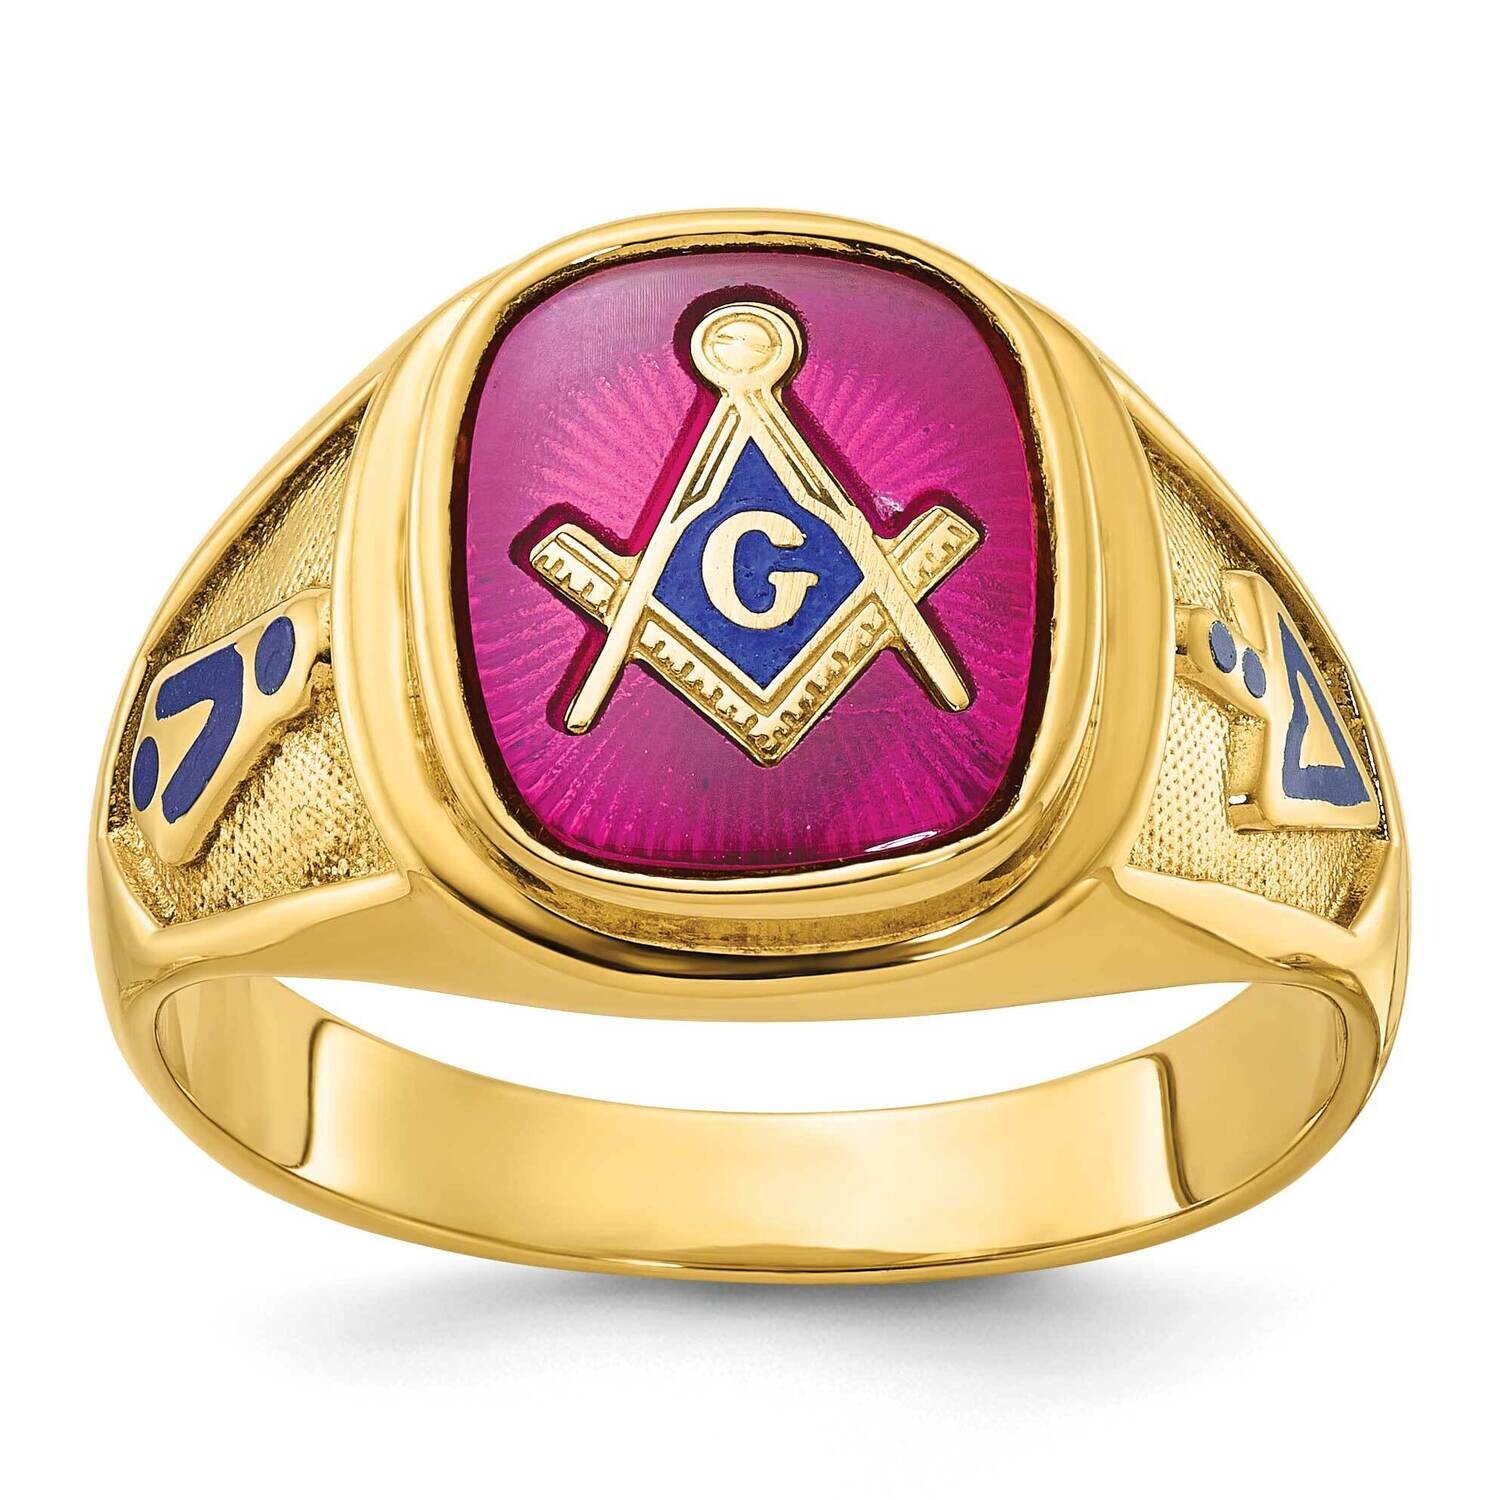 Ibgoodman Men's Polished Textured Blue Lodge Master Masonic Ring Mounting 10k Gold B57679-0Y